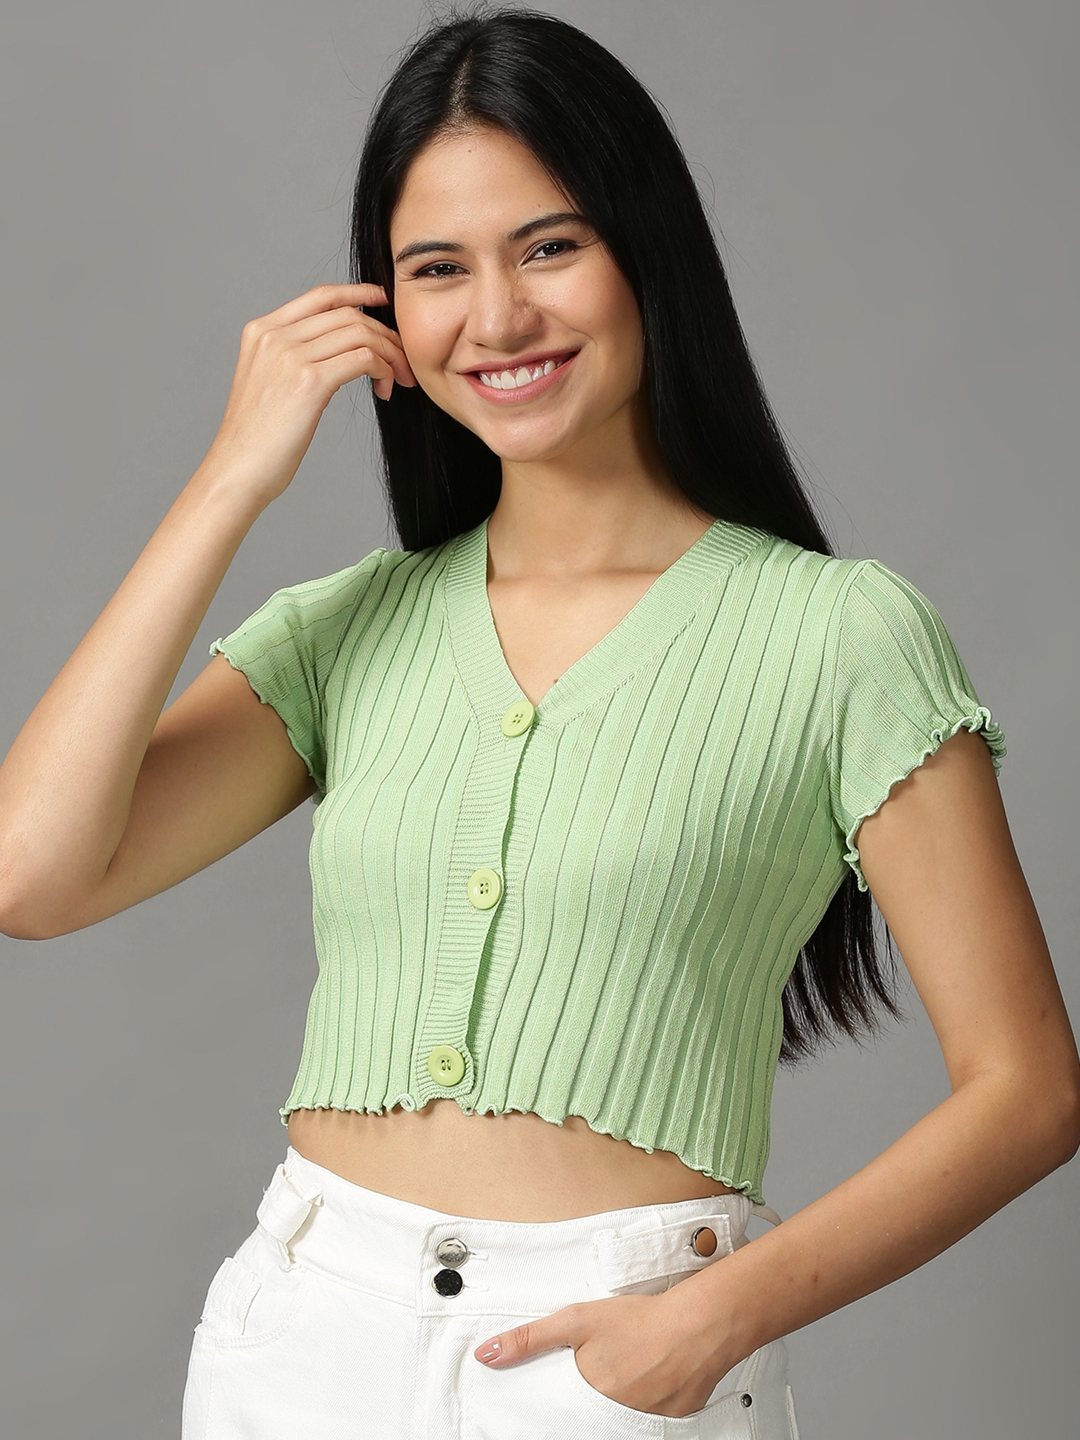 Women's Green Cotton Blend Solid Tops